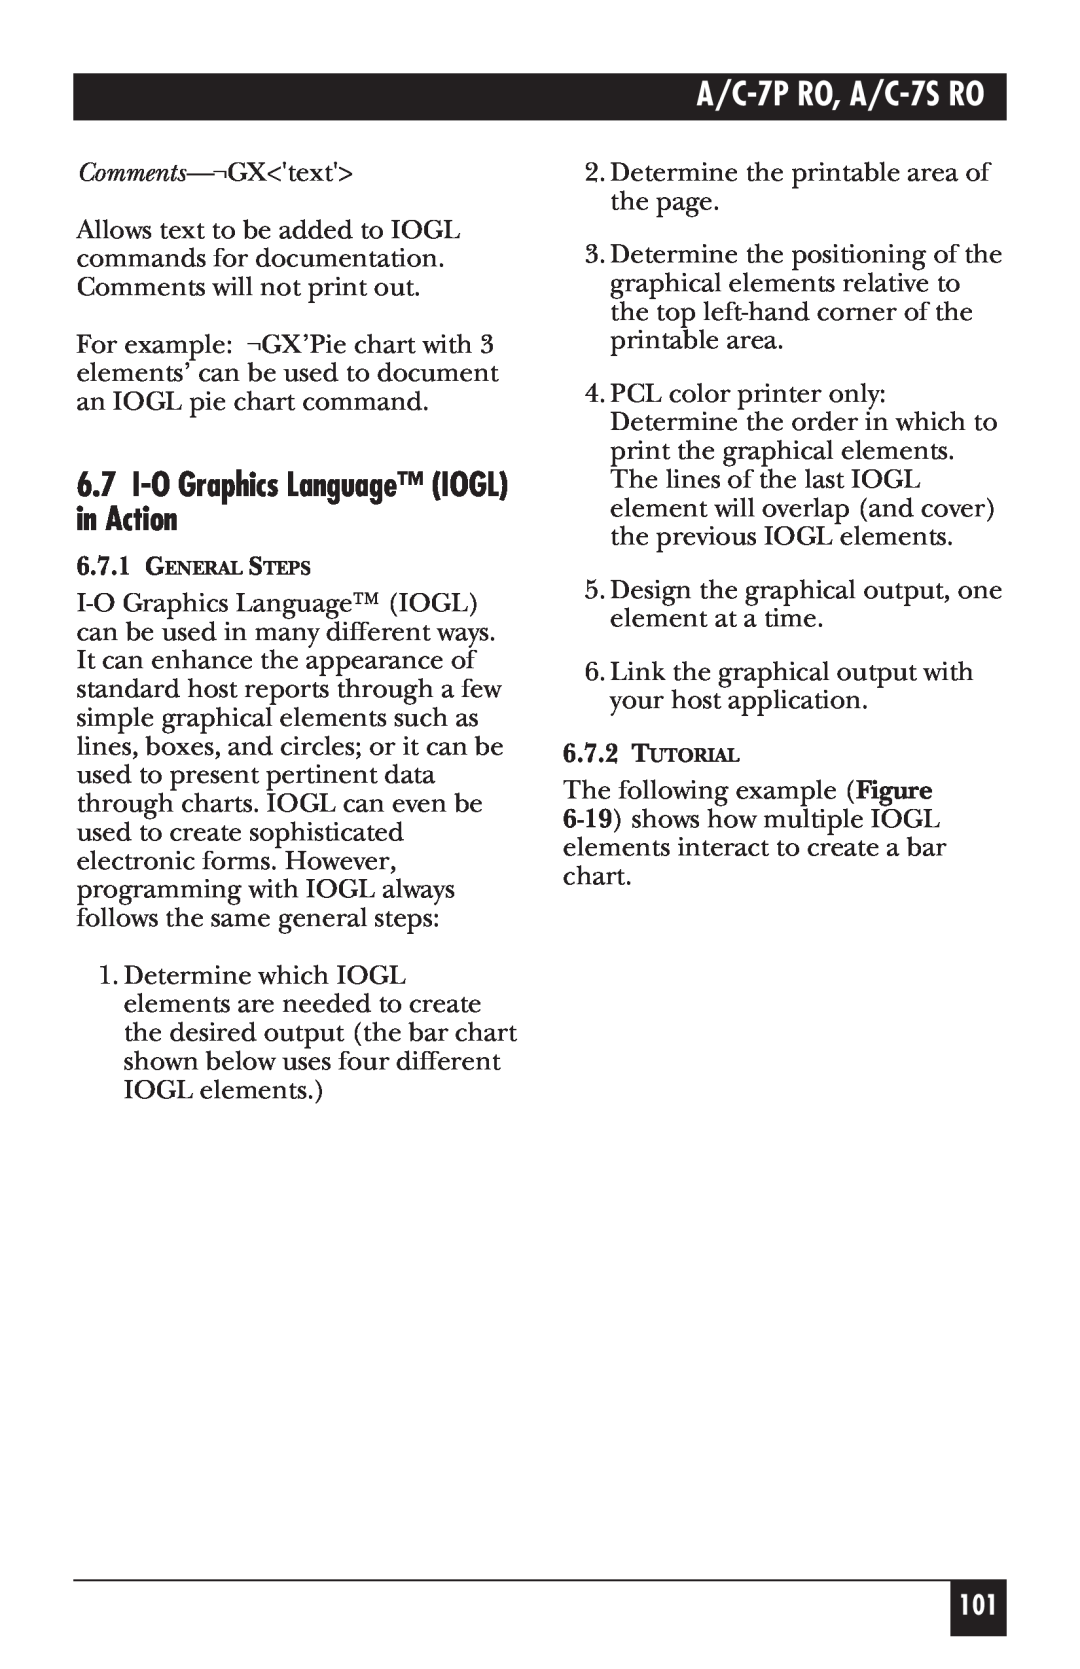 Black Box manual I-O Graphics Language IOGL in Action, A/C-7P RO, A/C-7S RO 